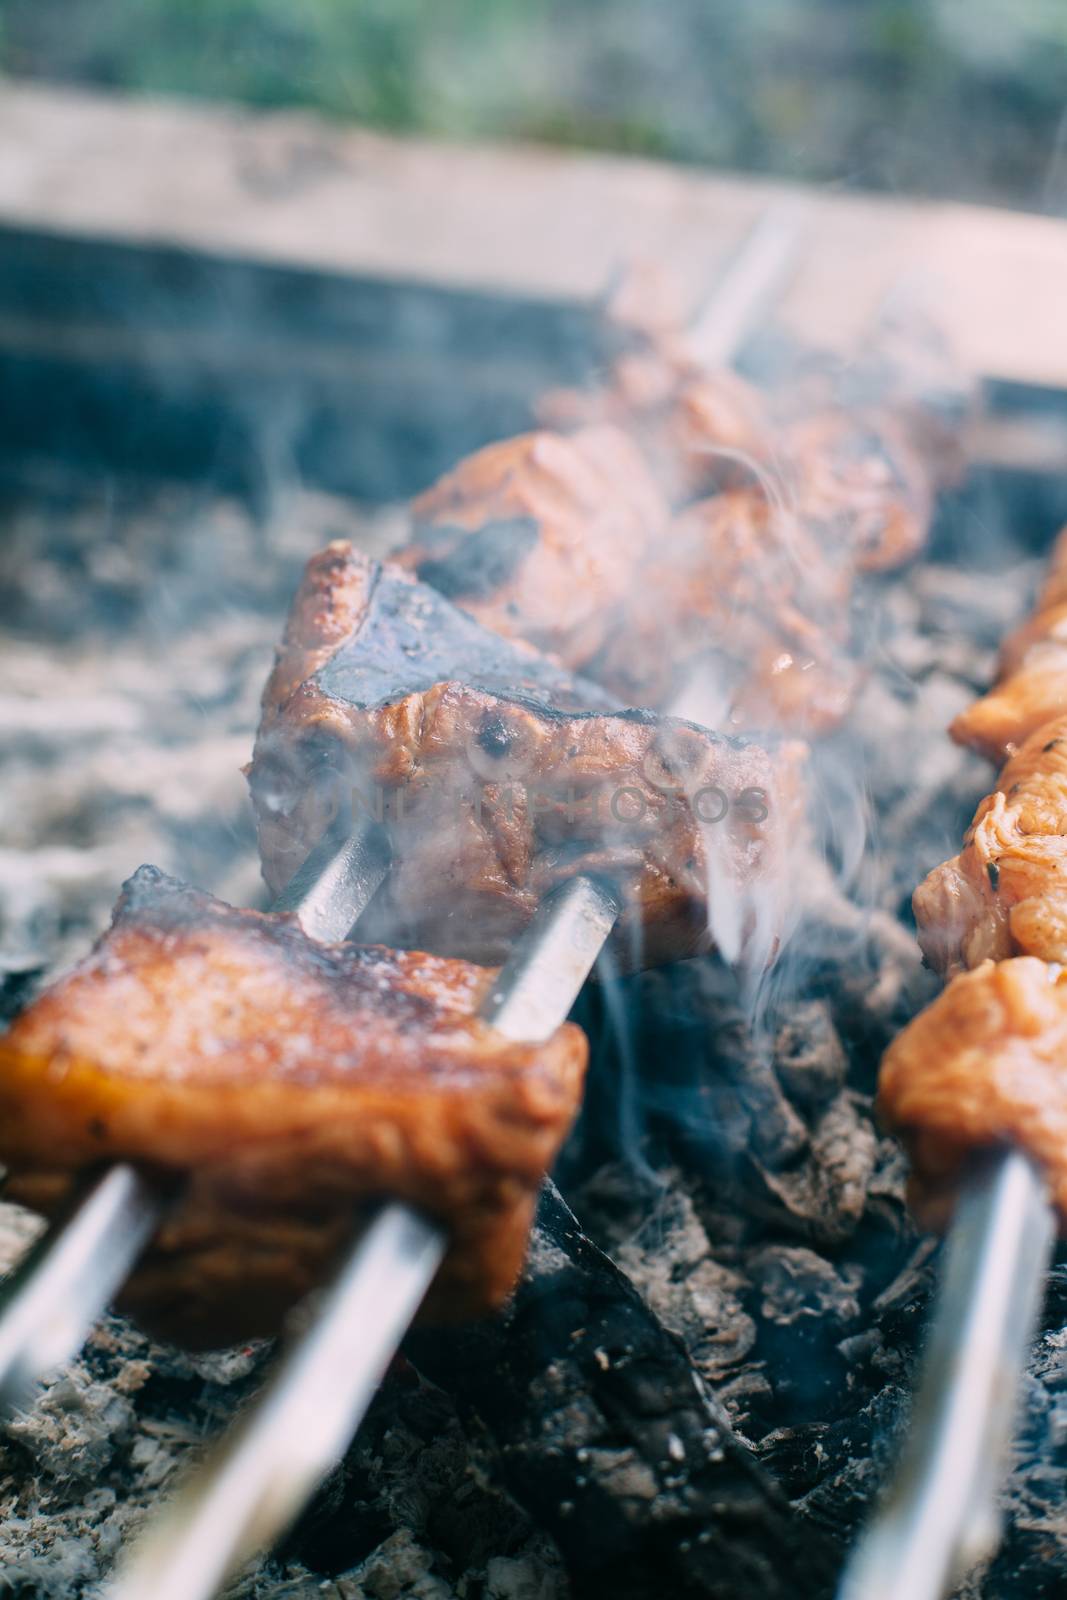 Skewers of pork ribs on a skewer in smoke. Cooking meat in natur by Opikanets